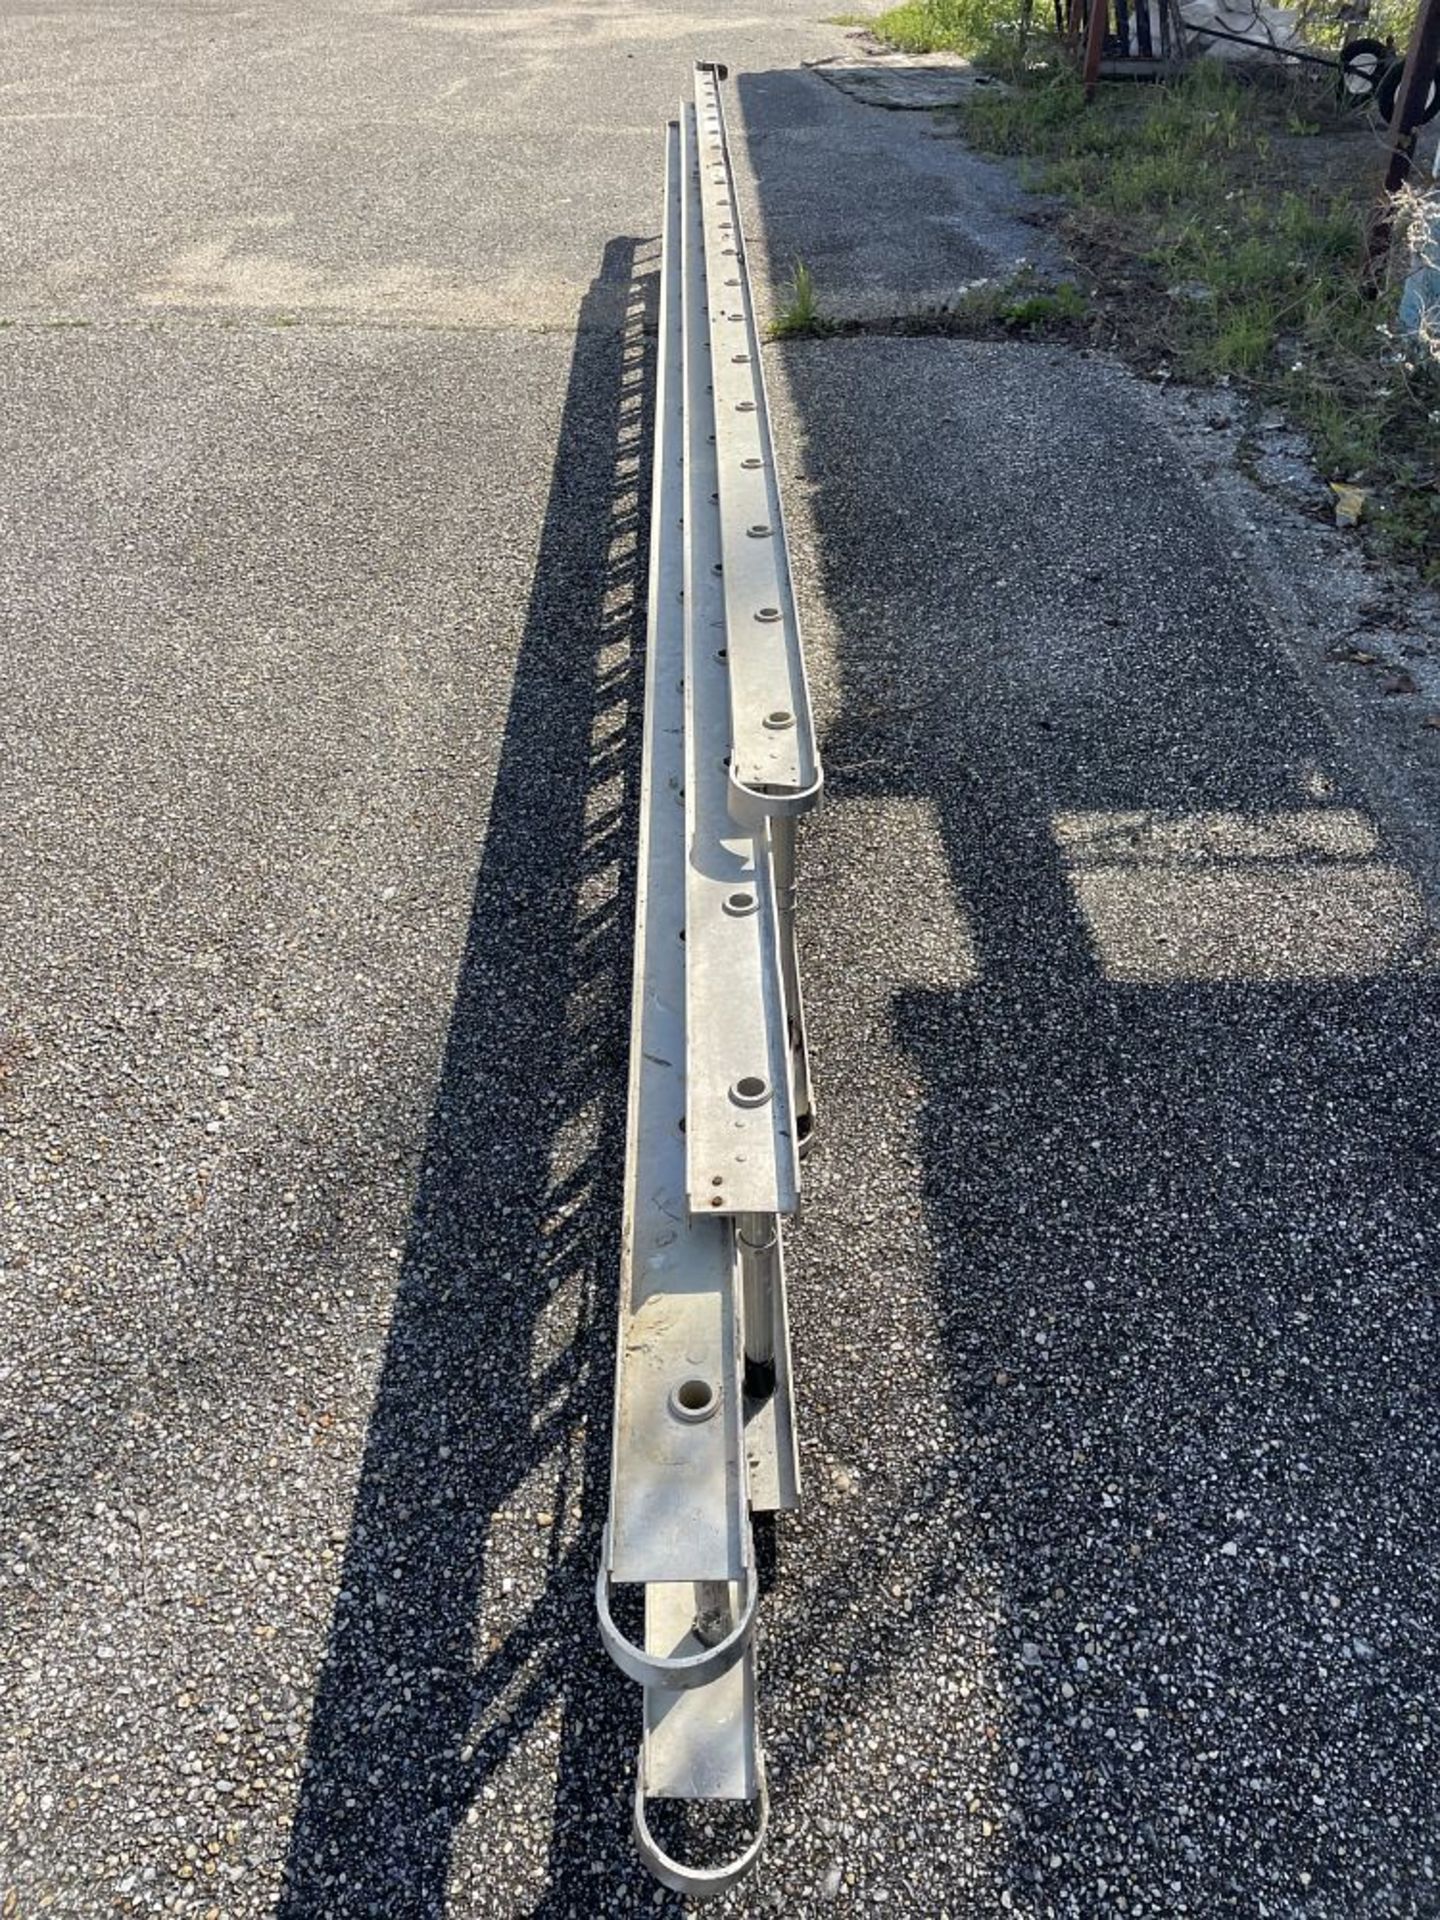 60ft Aluminum Extension Ladder - Image 2 of 2